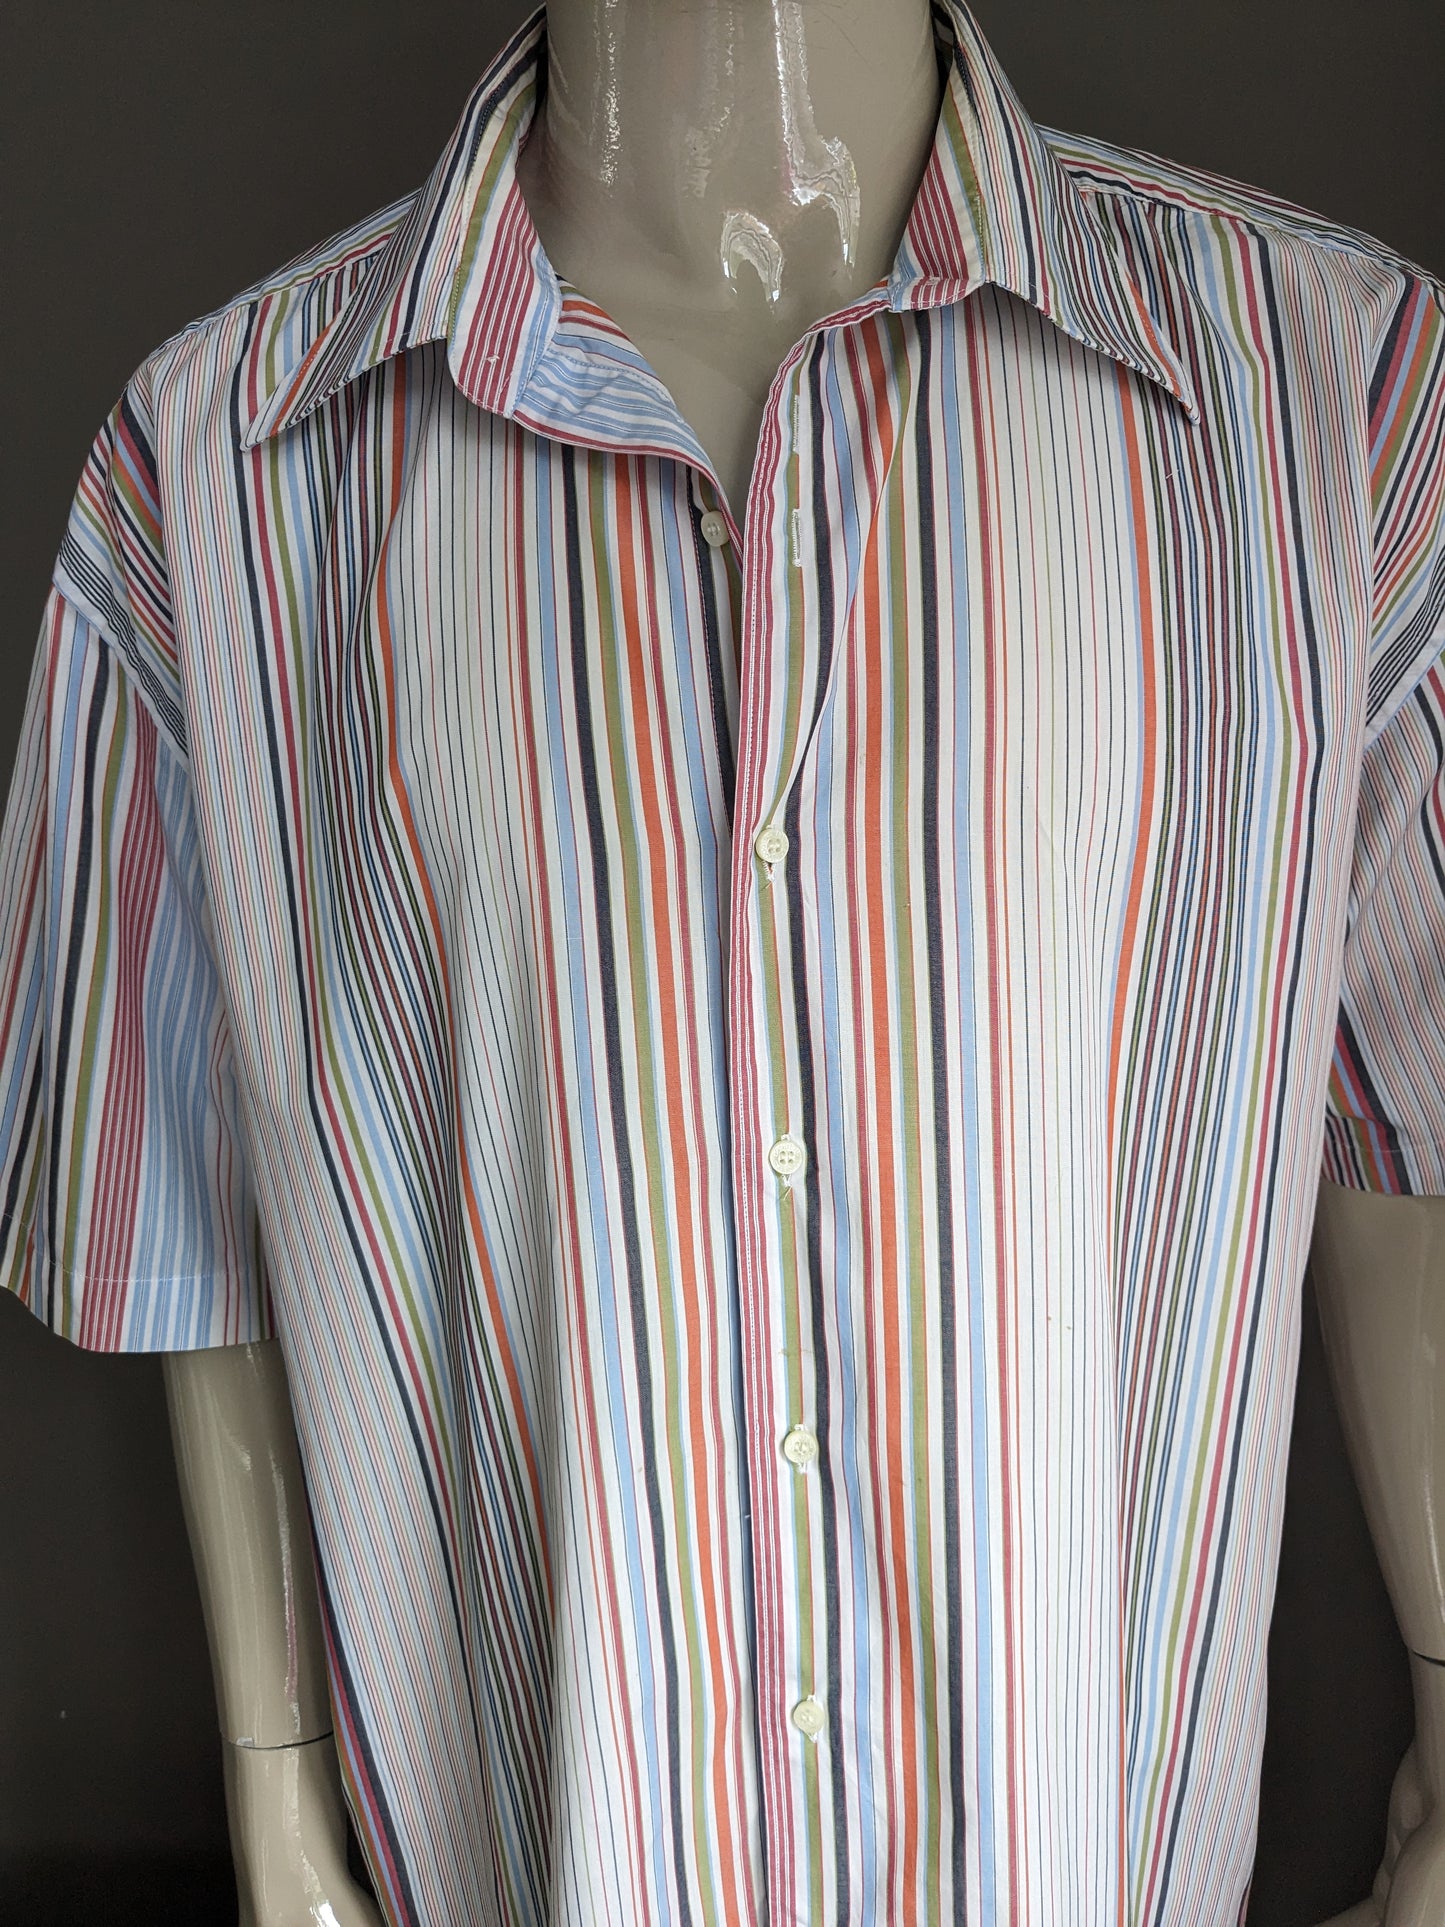 Dodgers shirt short sleeve. Colored striped motif. Size 3XL / XXXL.